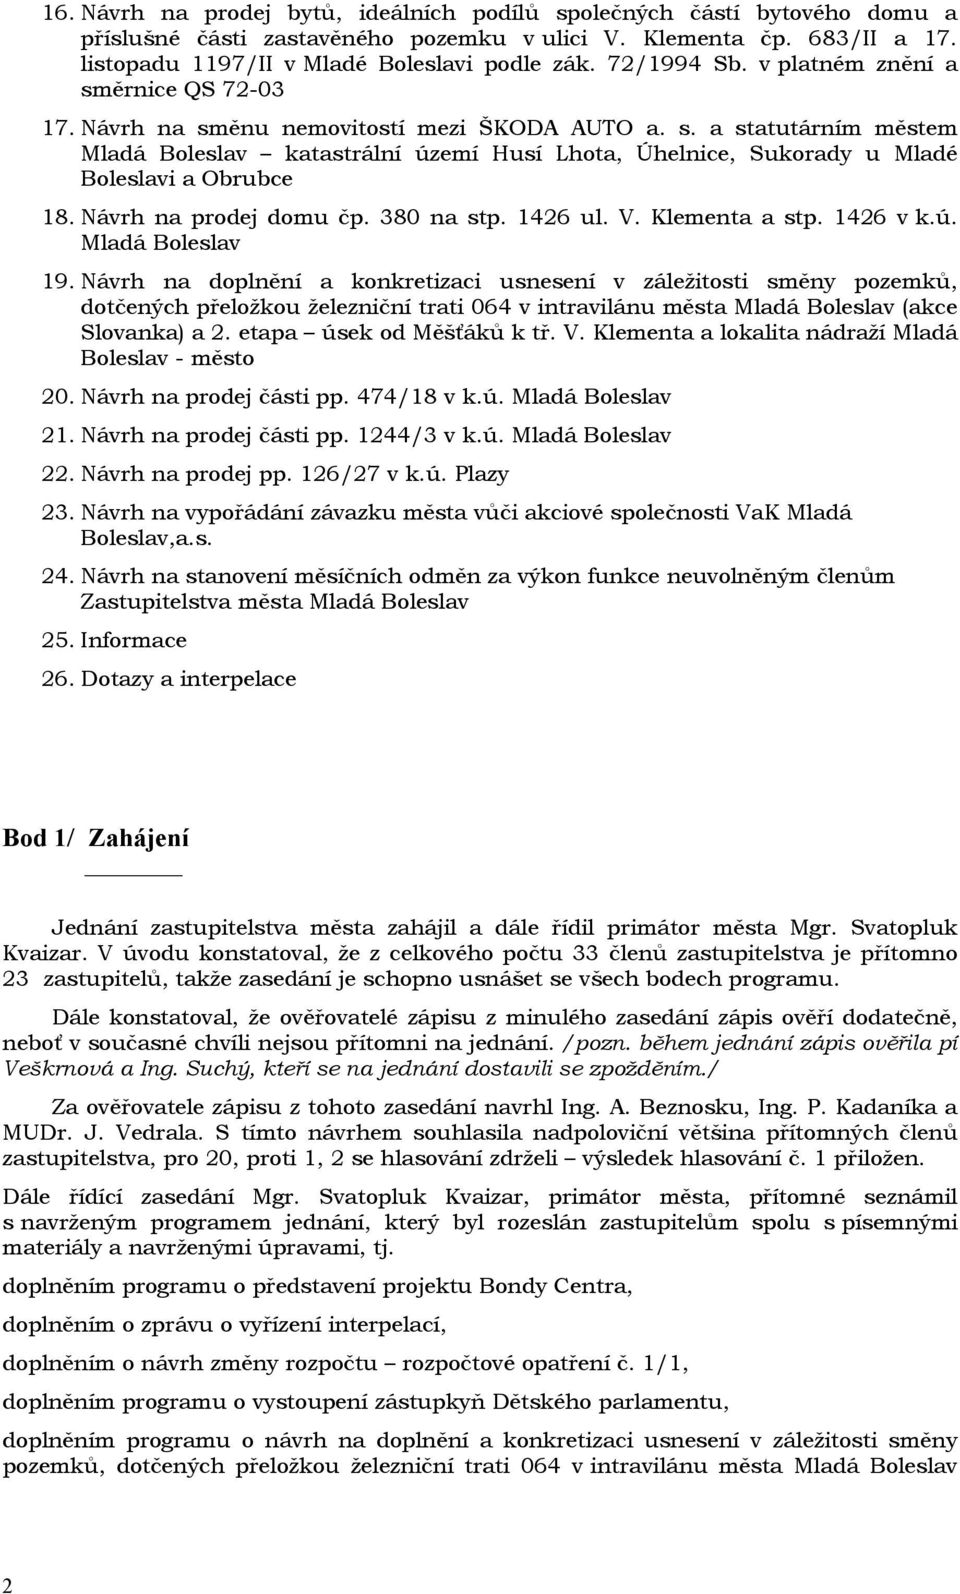 Návrh na prodej domu čp. 380 na stp. 1426 ul. V. Klementa a stp. 1426 v k.ú. Mladá Boleslav 19.